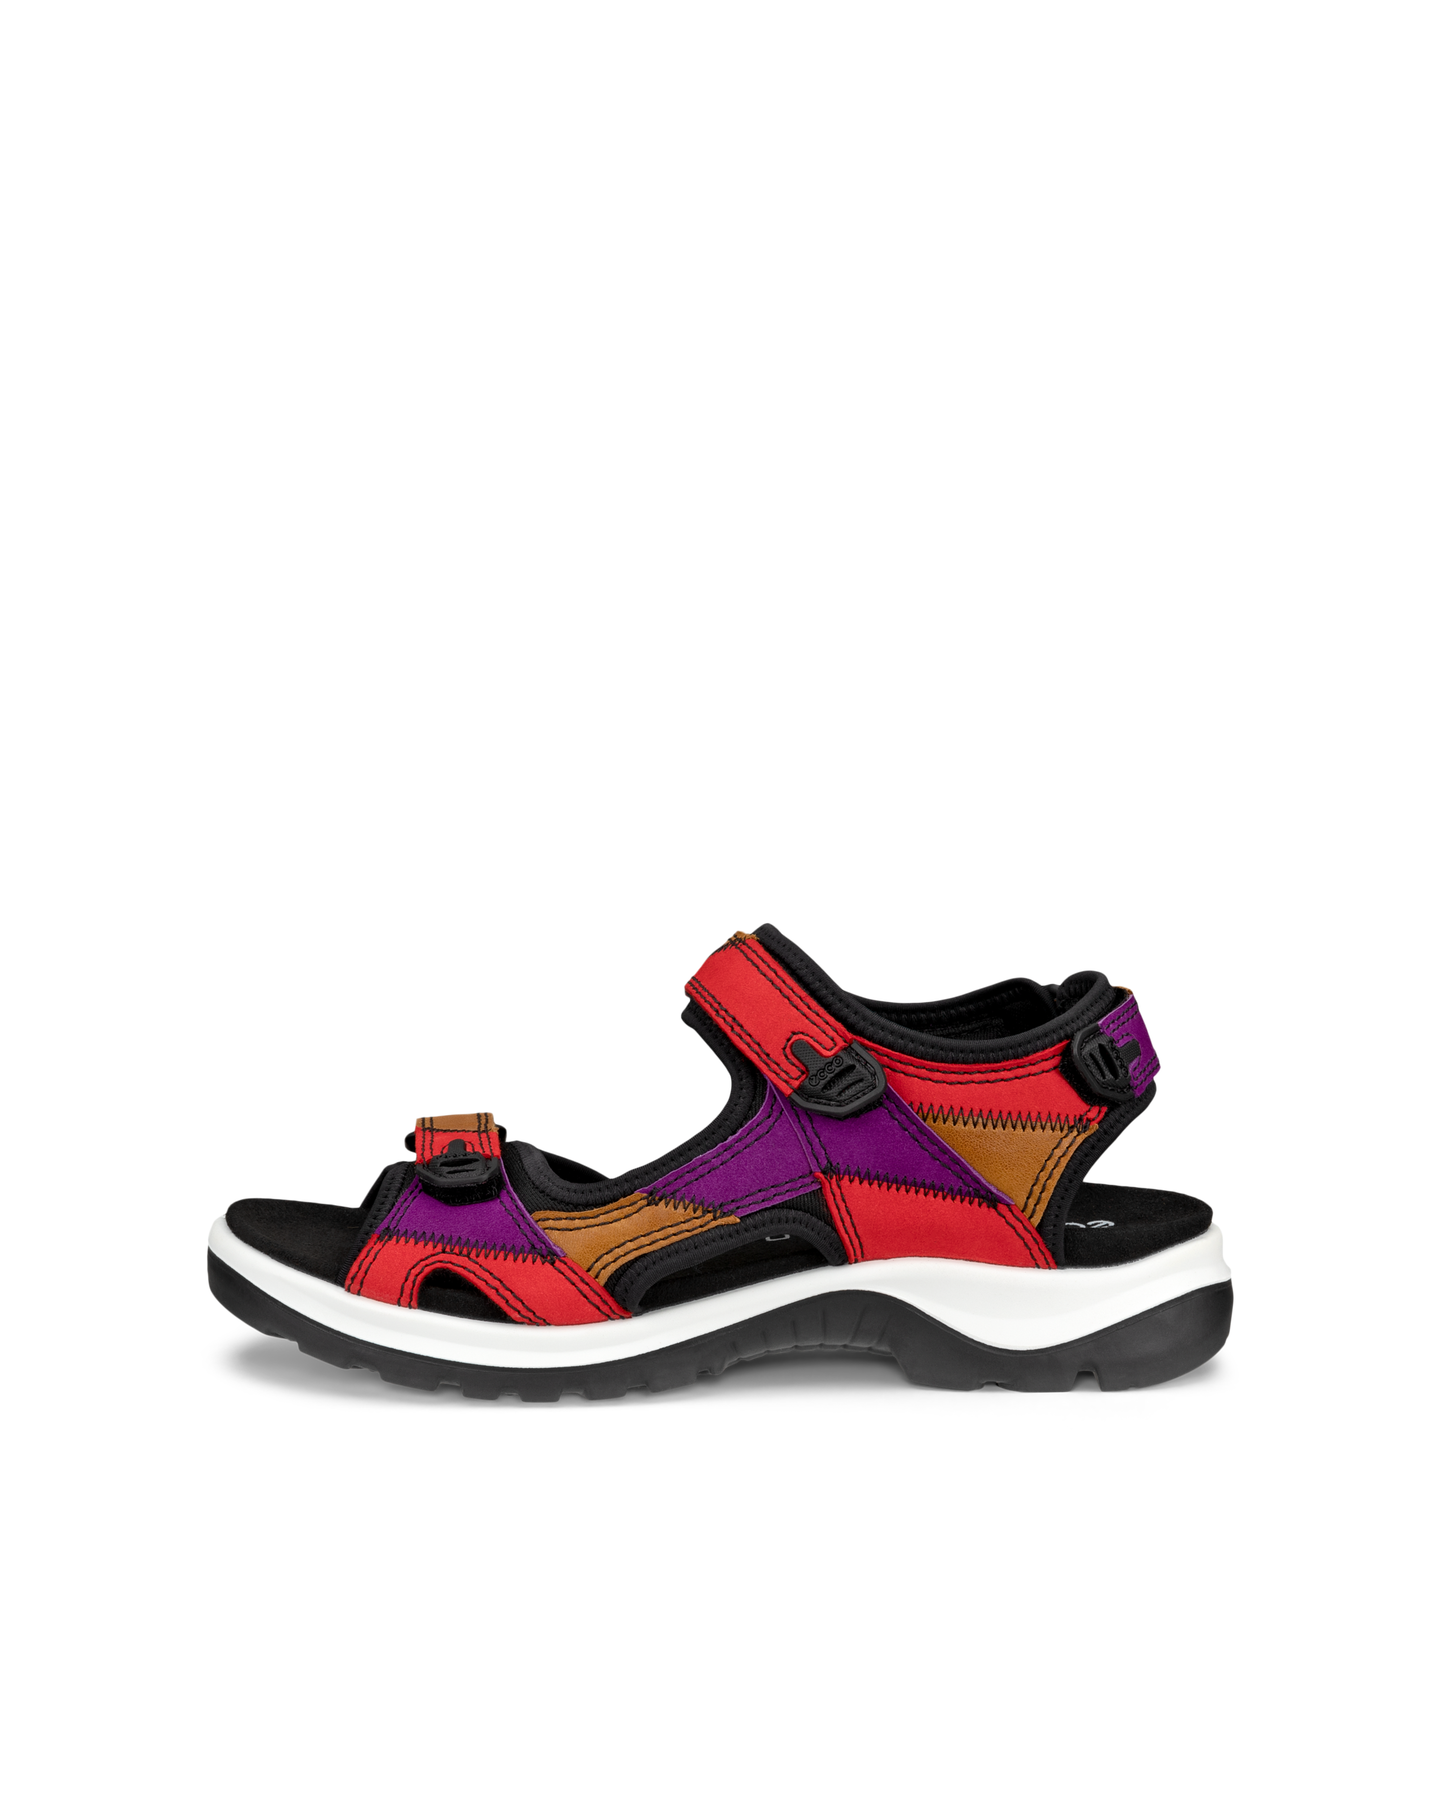 ECCO Women's Offroad Sandal Size 9 Leather Multicolor Hibiscus